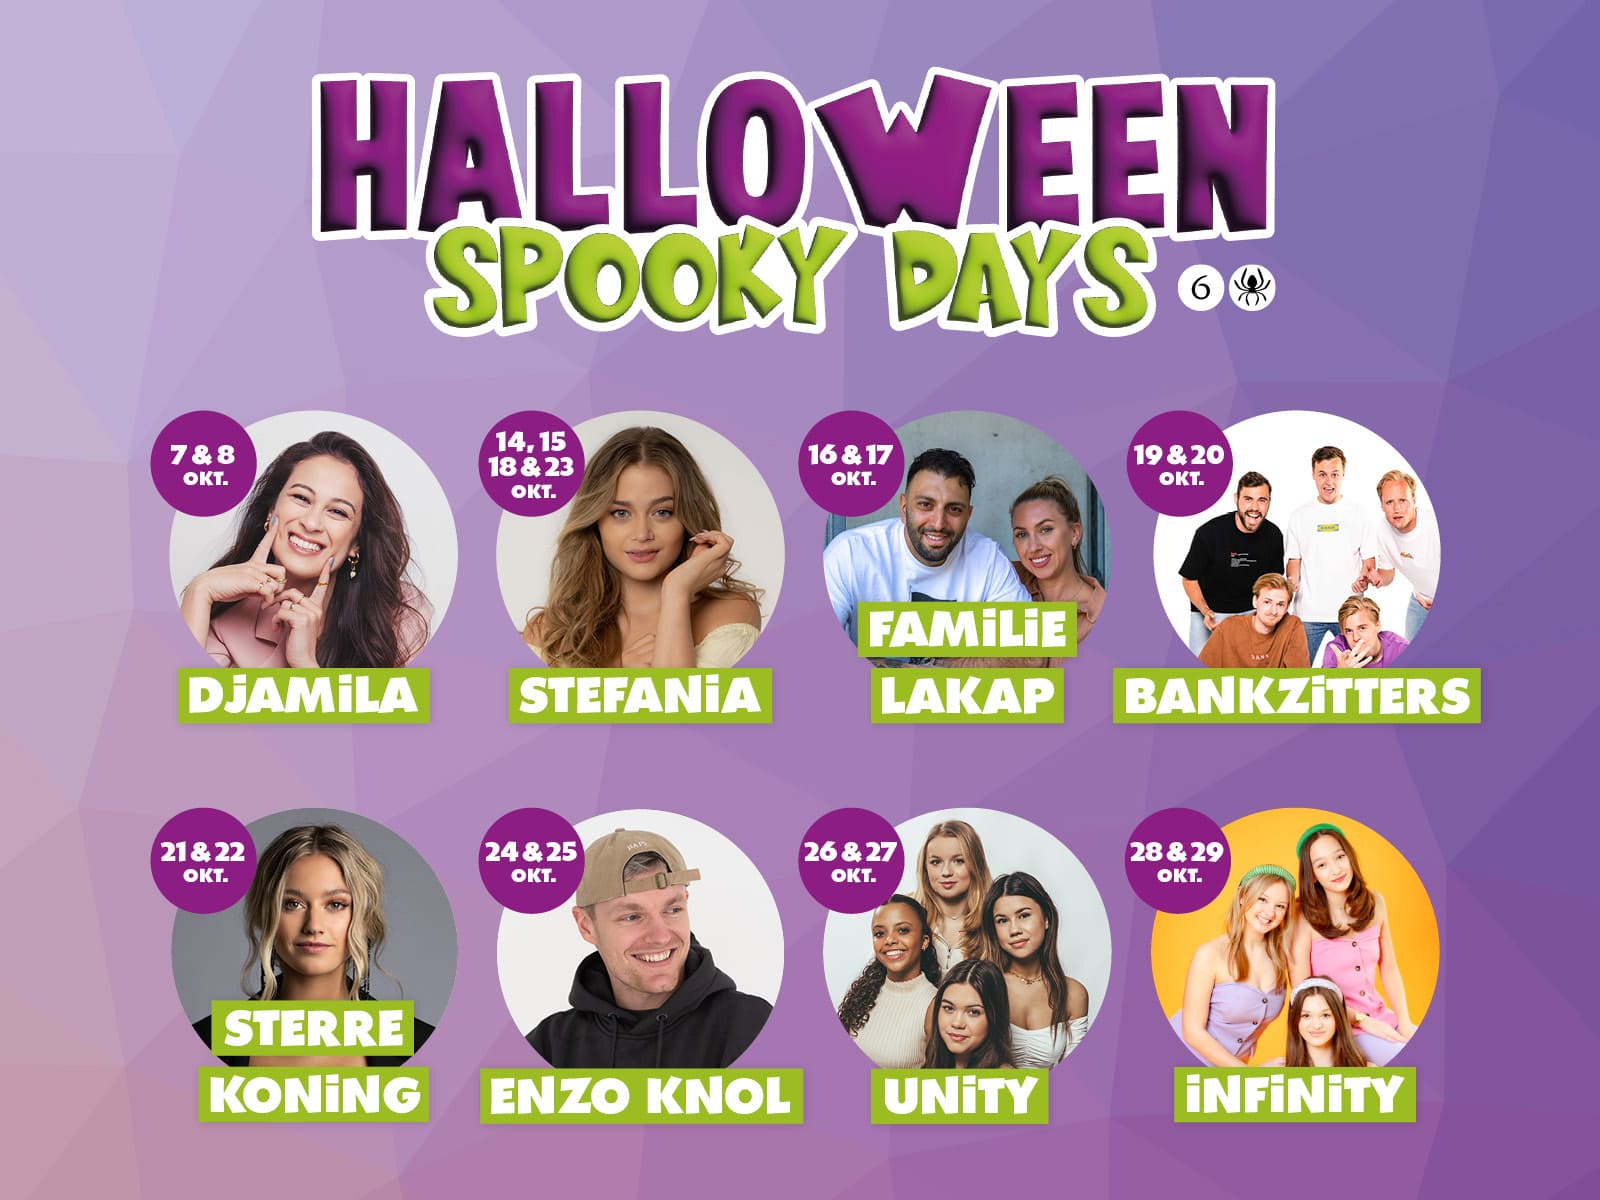 Halloween Spooky Days met artiesten en influencers met Enzo Knol, Bankzitters, Familie Lakap, Stefania, Meisje Djamila en nog veel meer!!!